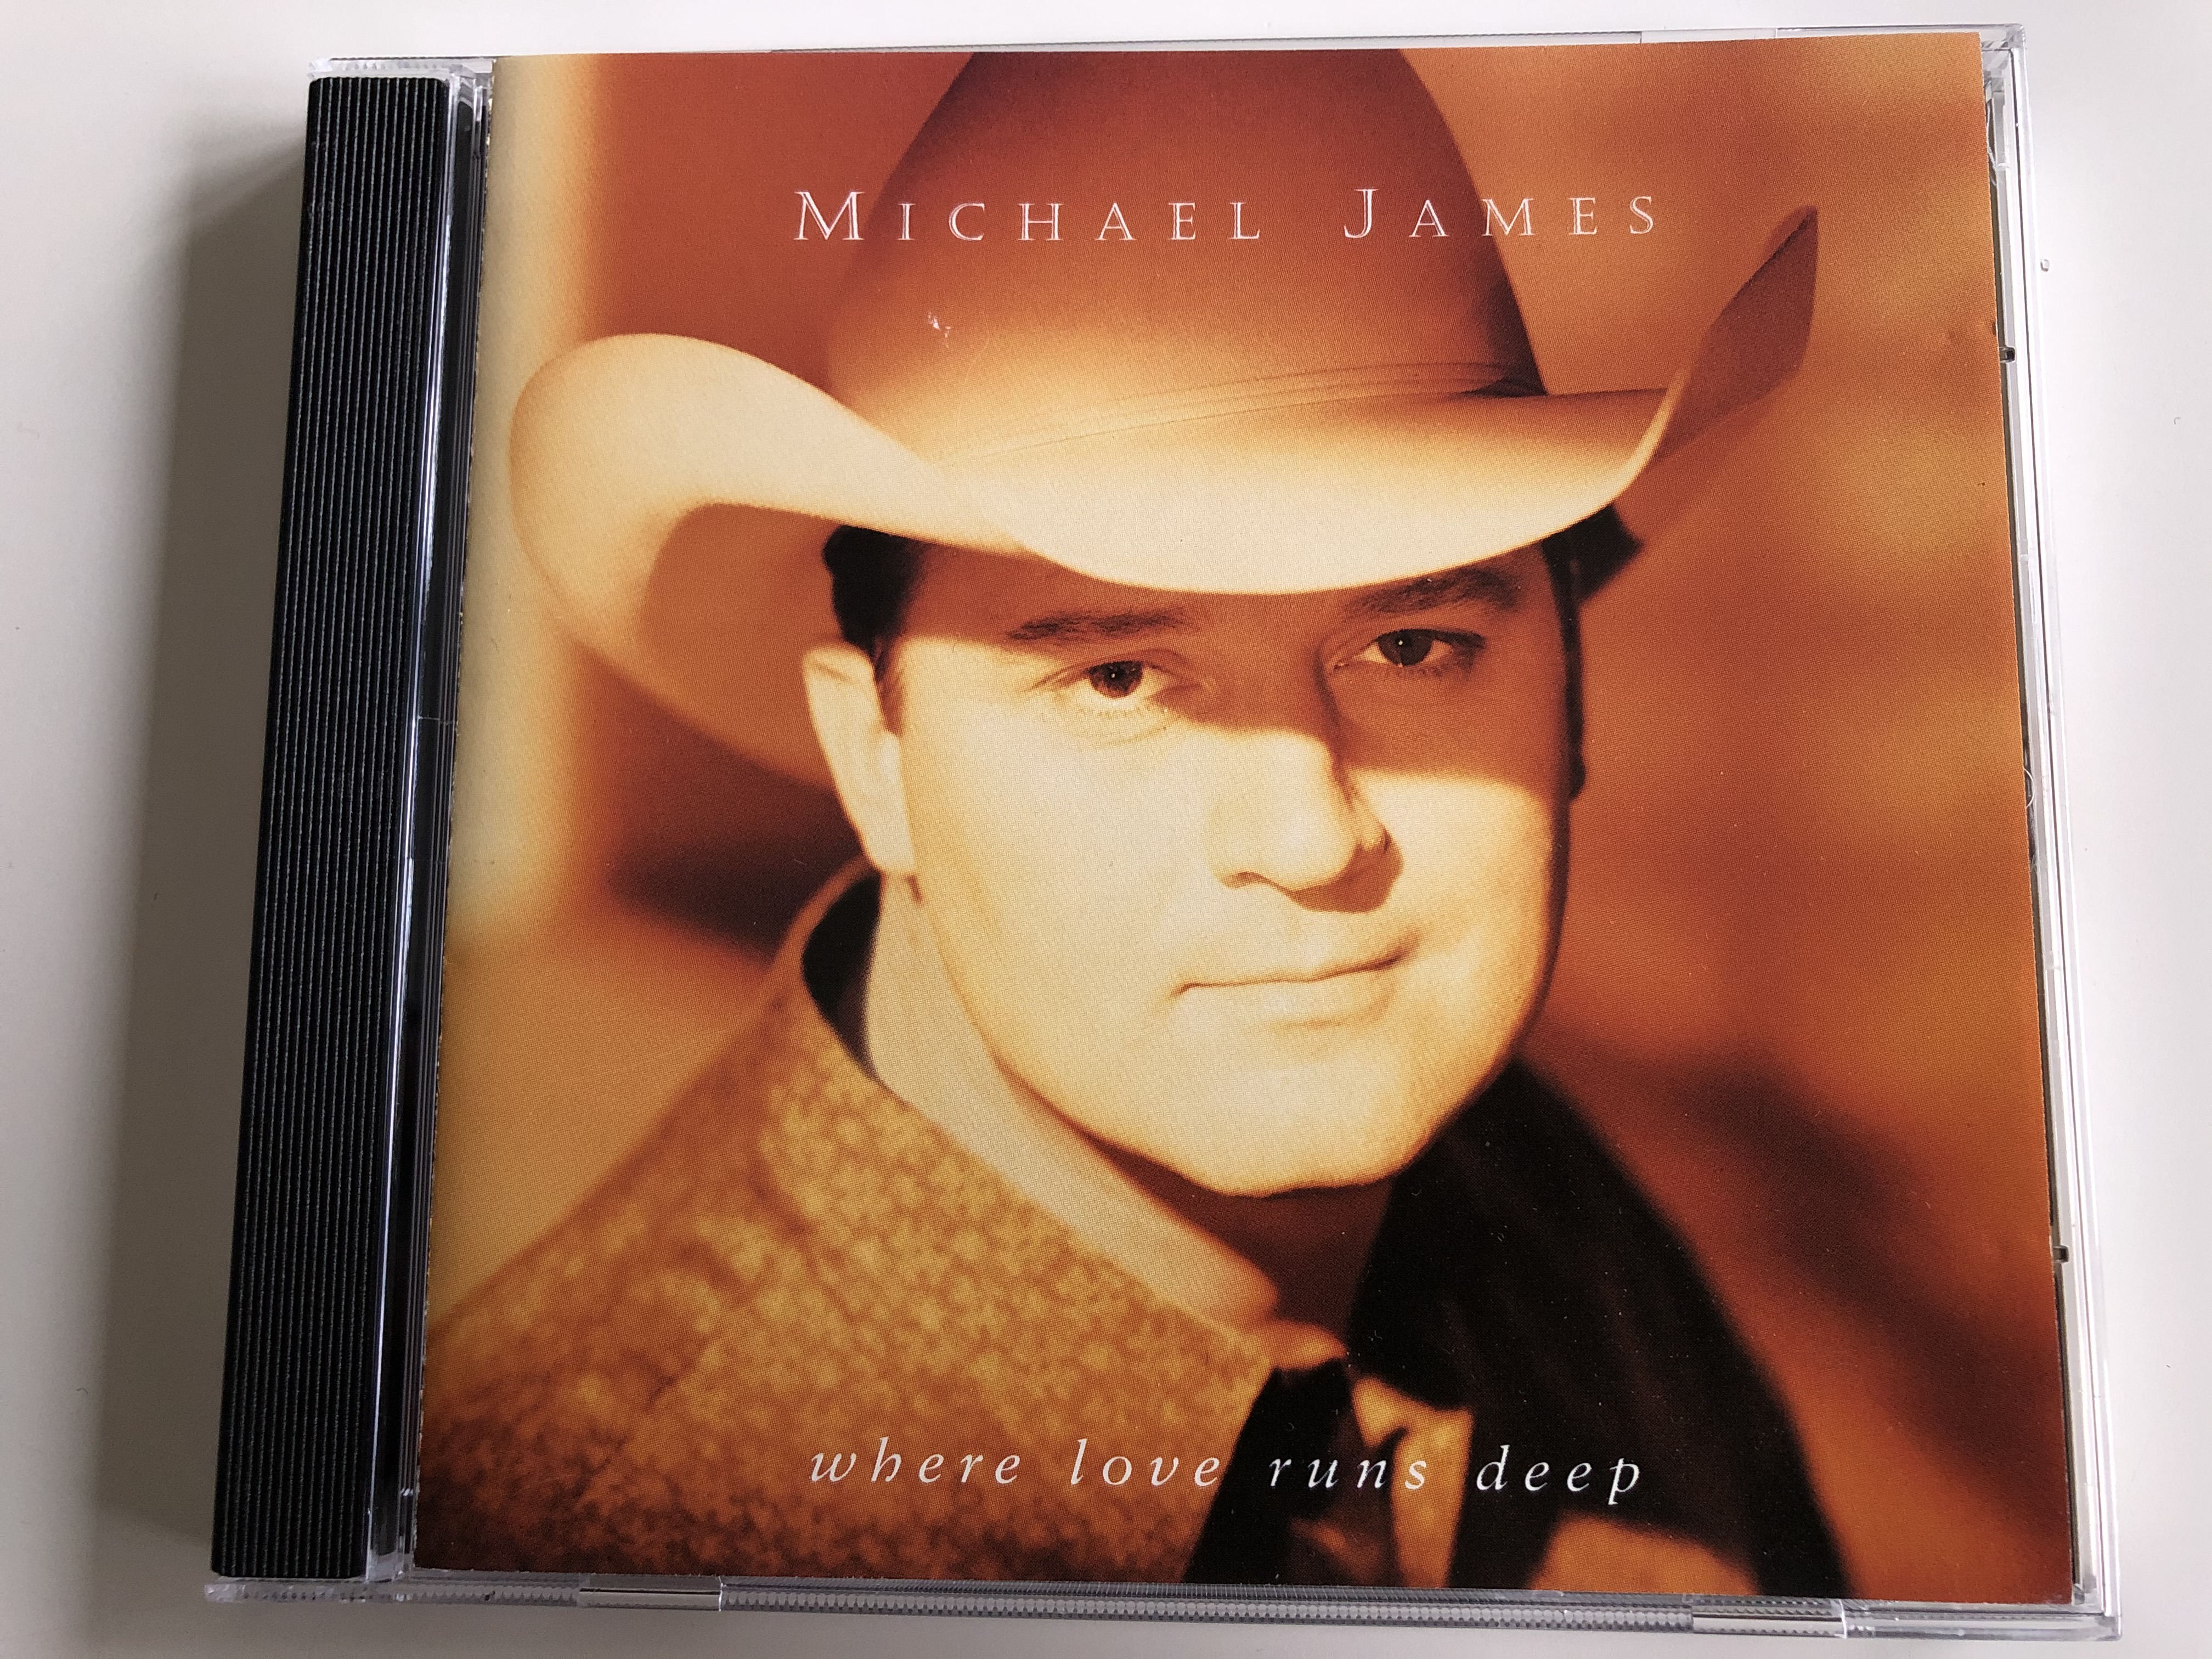 michael-james-where-love-runs-deep-reunion-records-audio-cd-1995-701-0102-724-1-.jpg